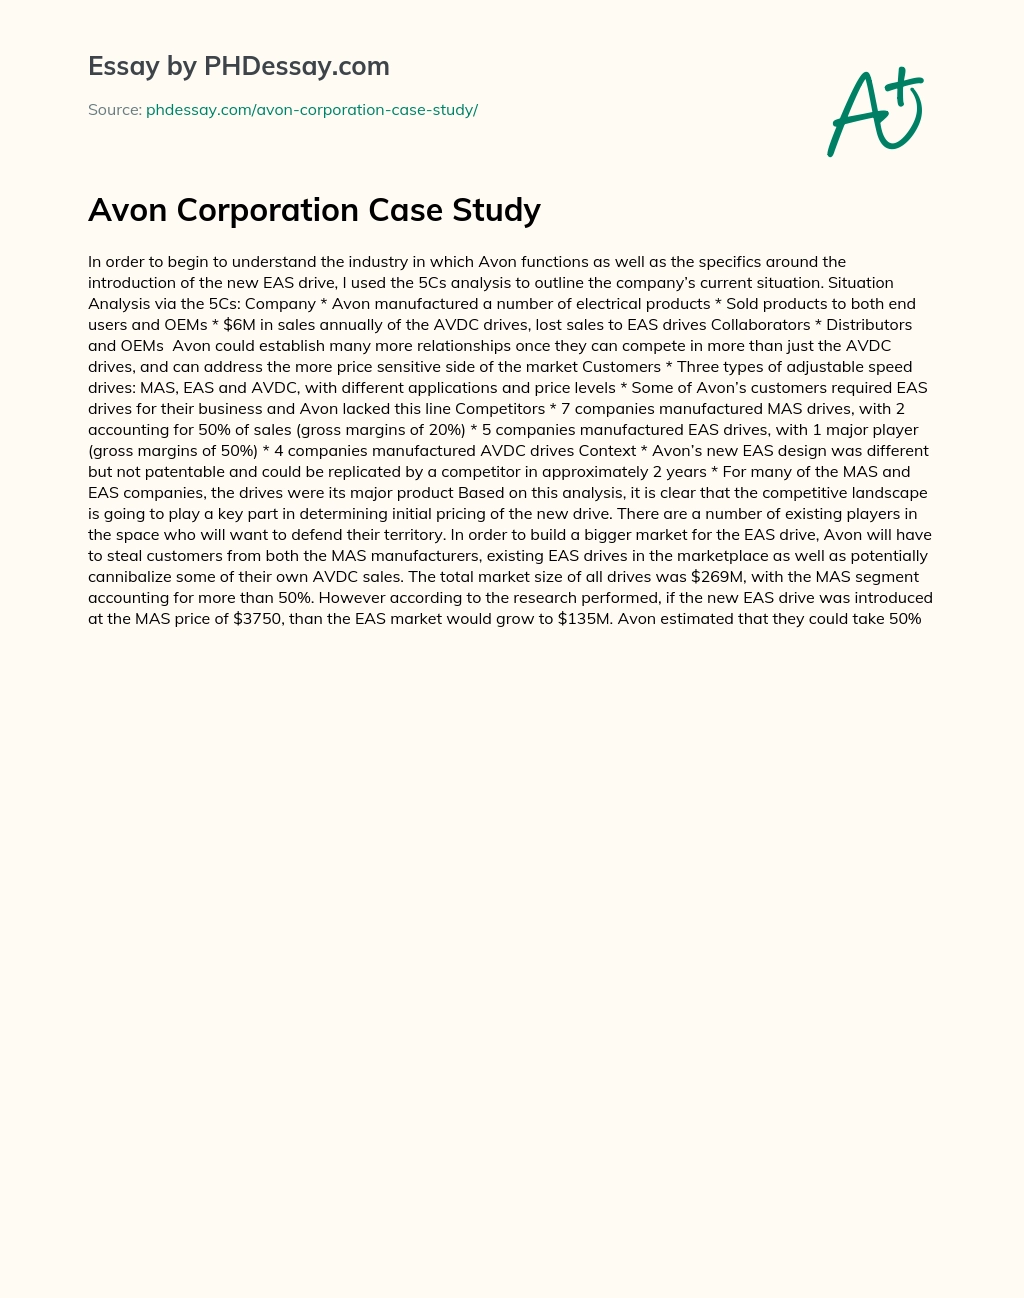 Avon Corporation Case Study essay